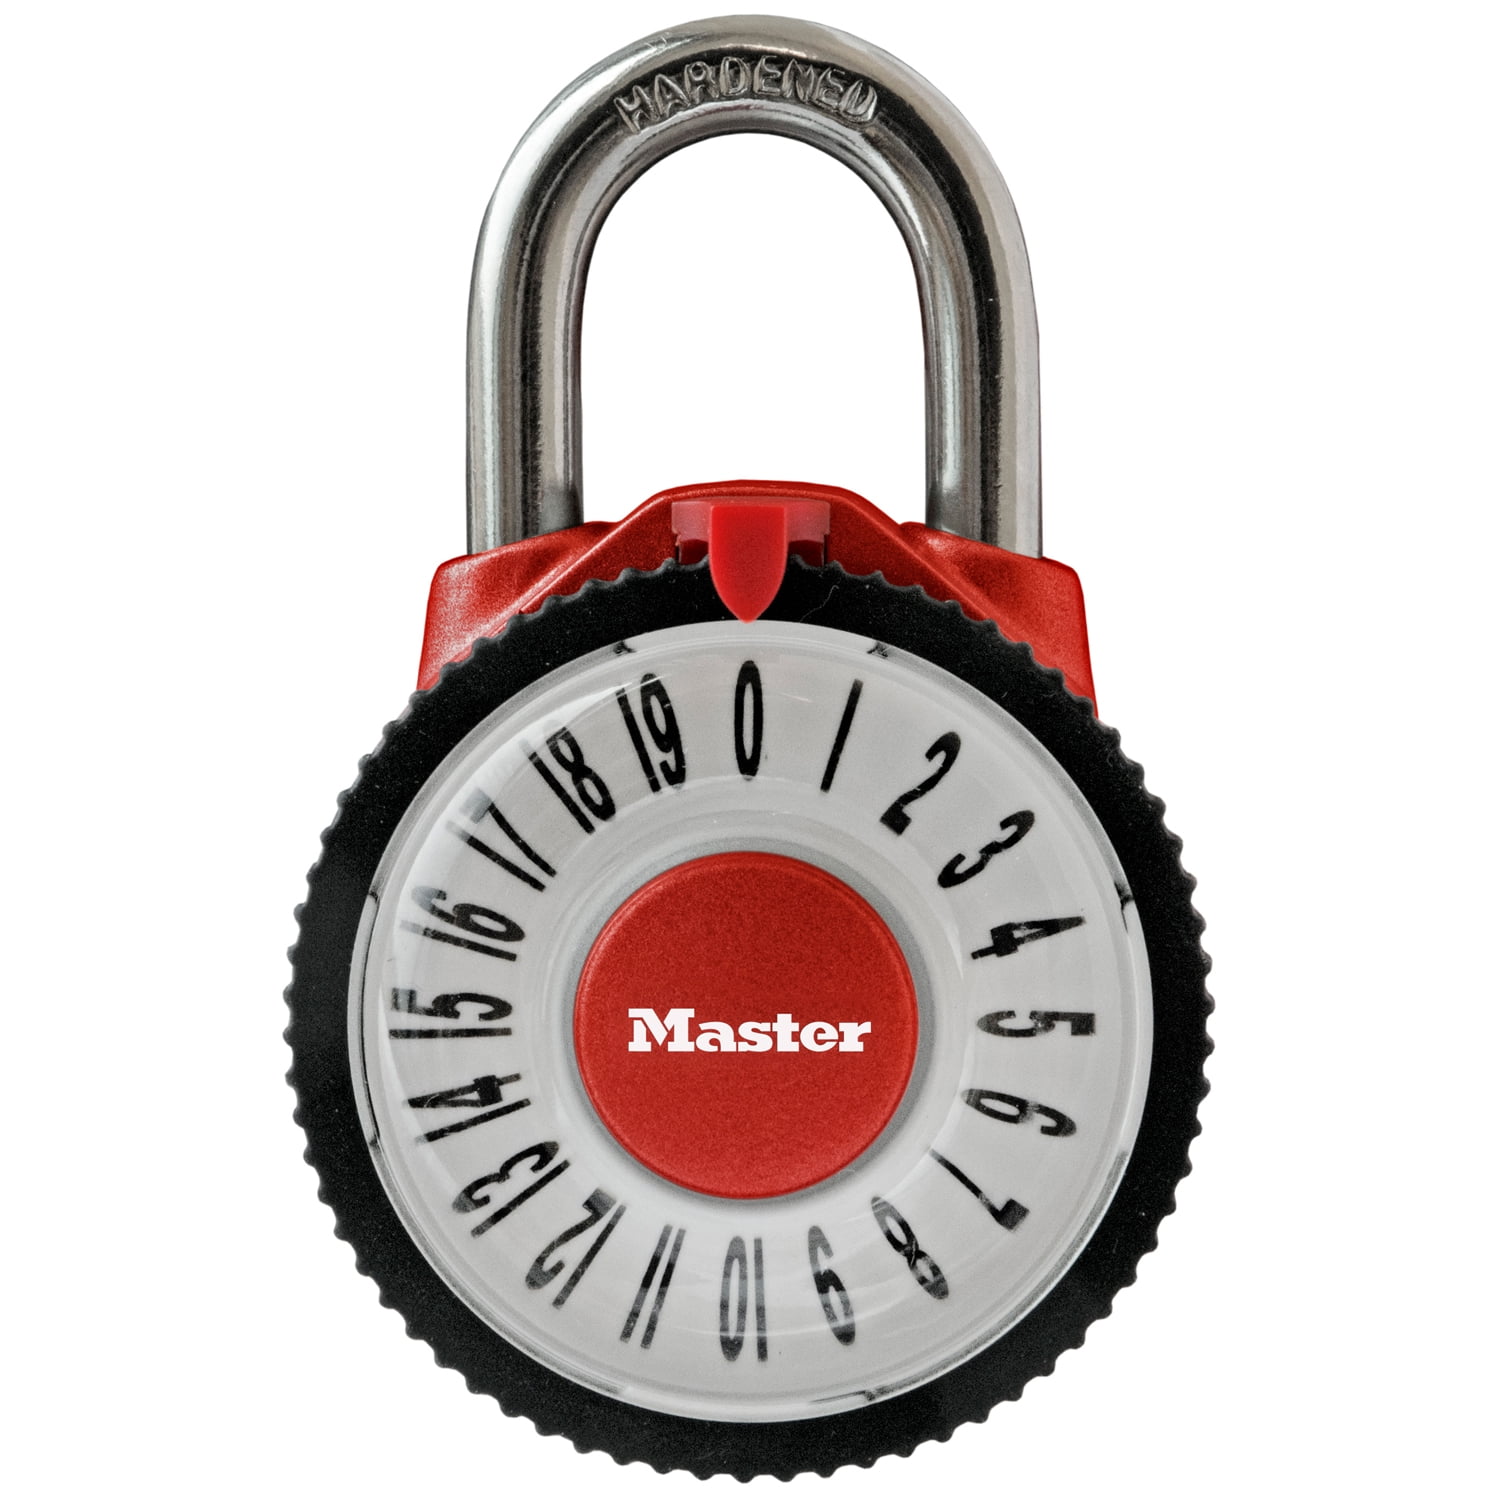 Master Lock 1530DCM Combination Padlock 1 Pack Assorted Colors